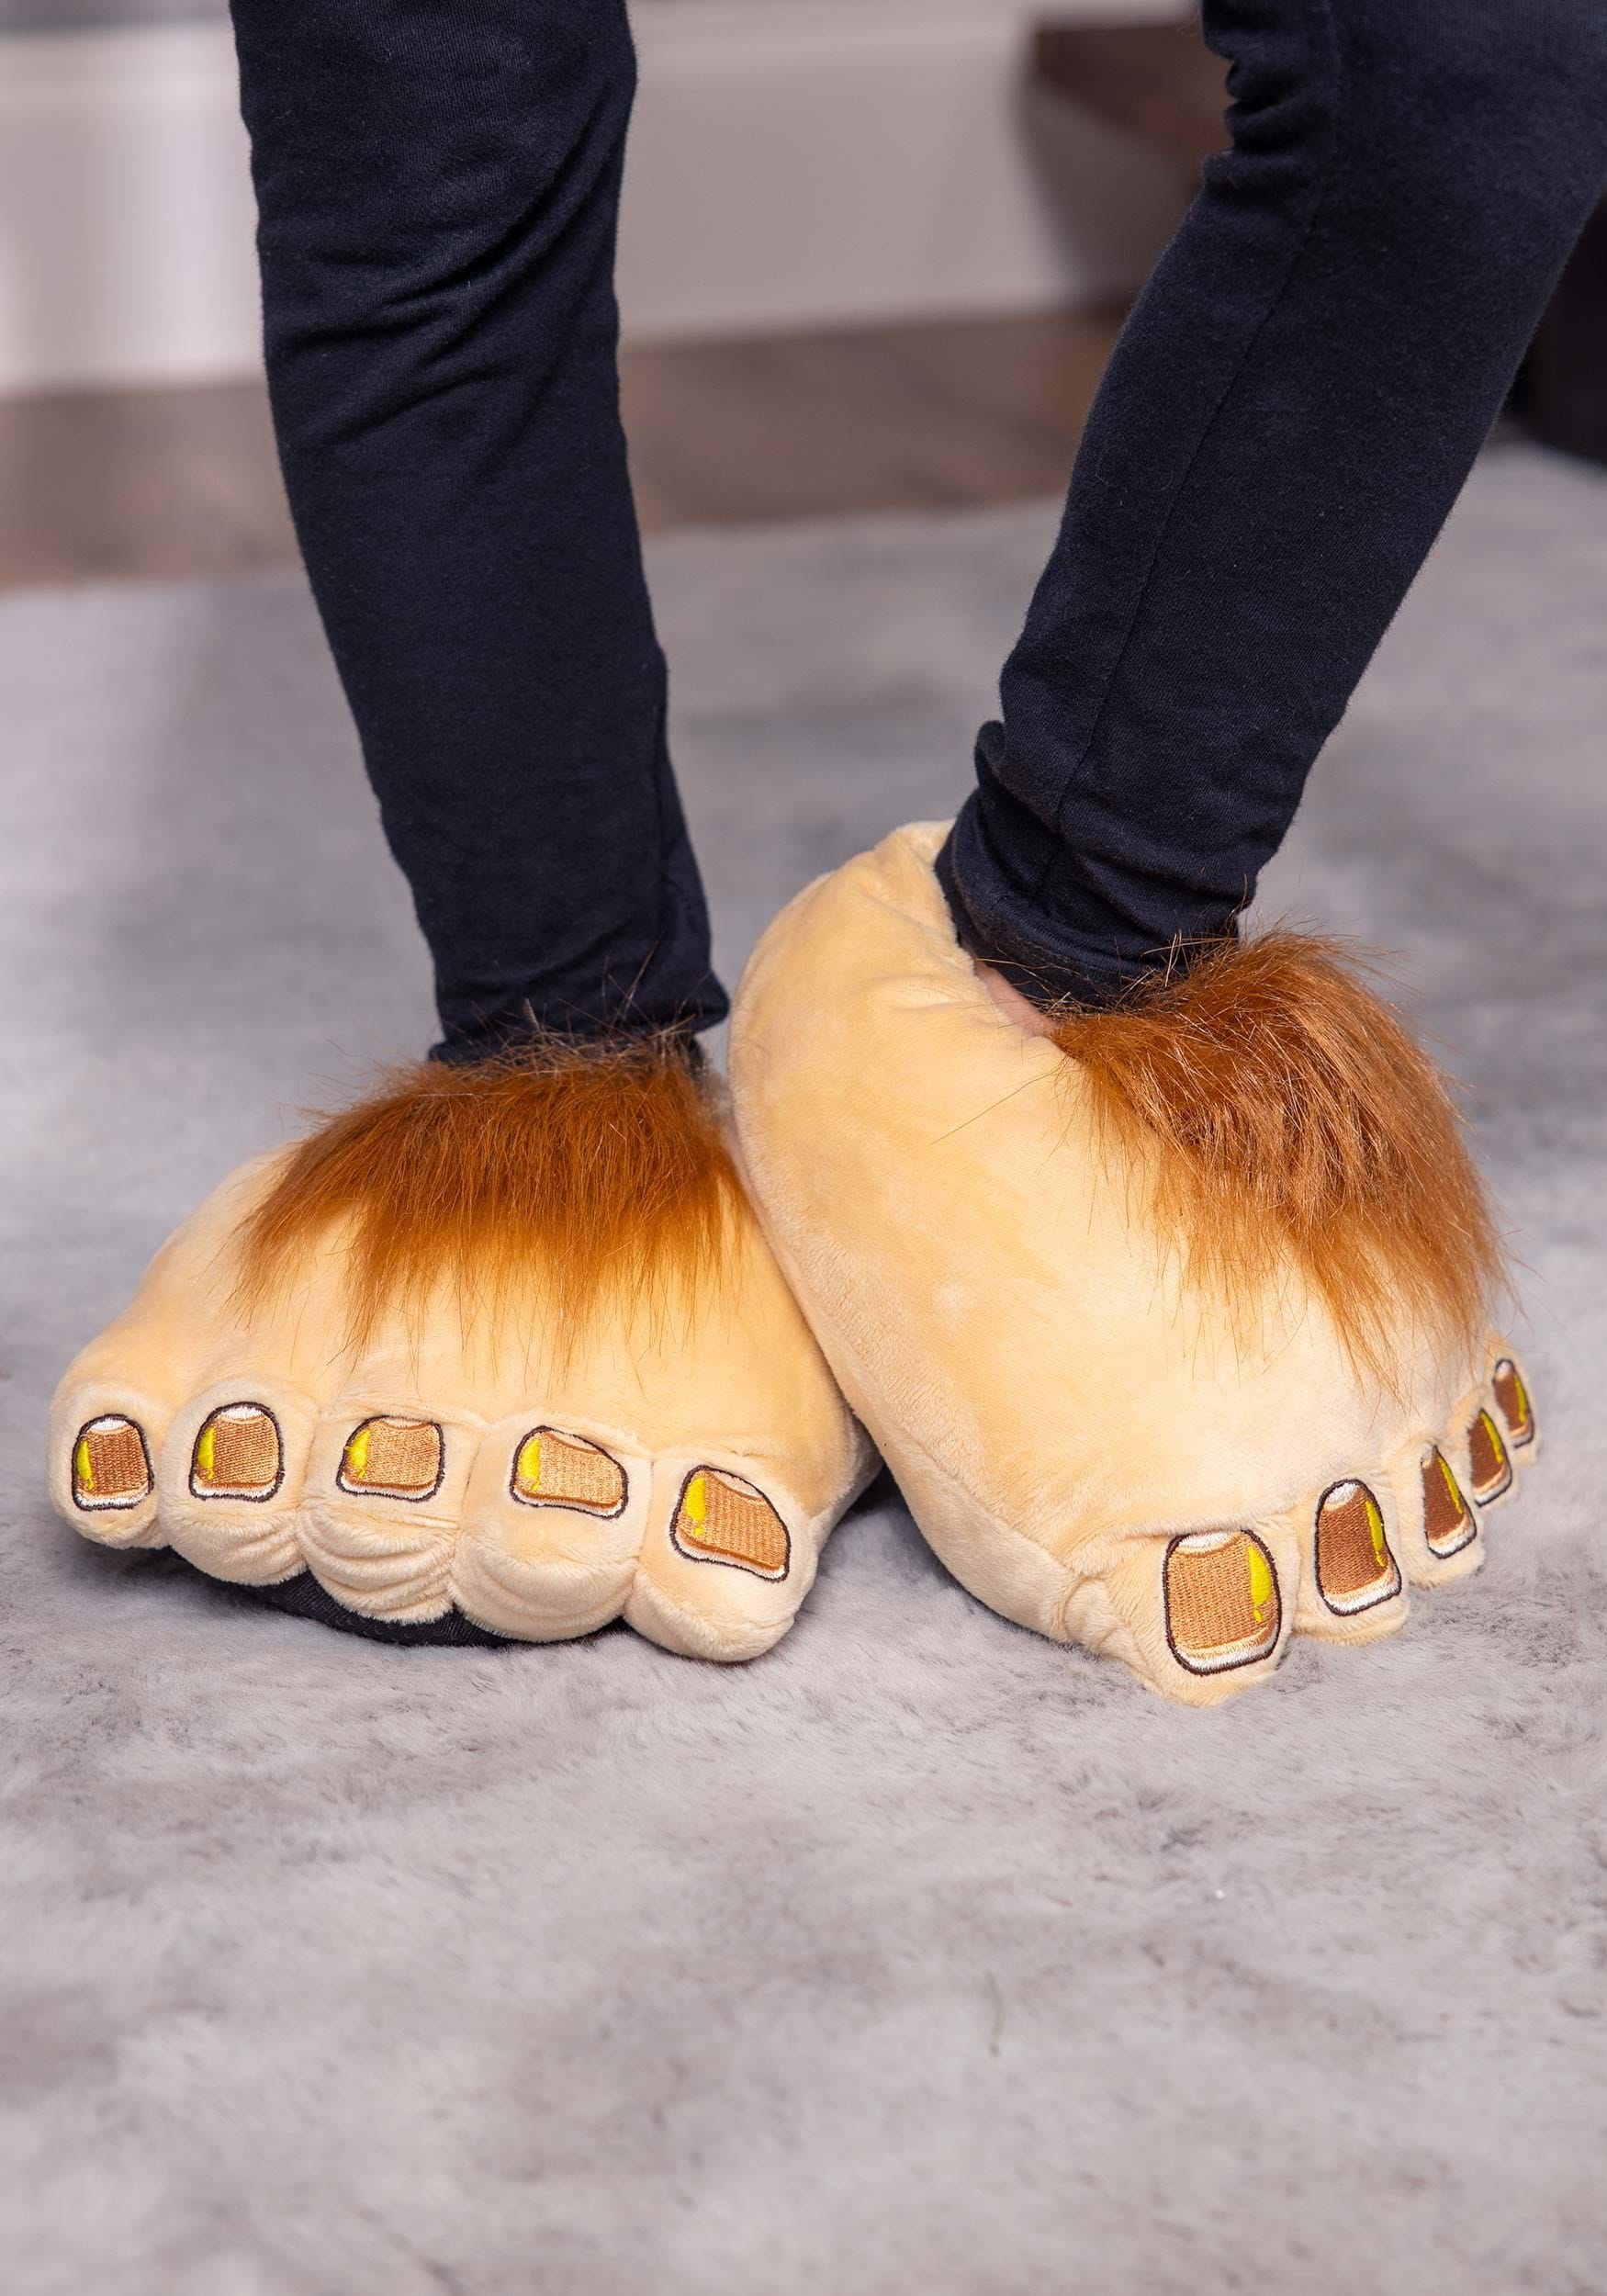 Warm Home Slippers The Hobbit Big Feet Unisex Savage Monster Plush Indoor  Shoes | eBay